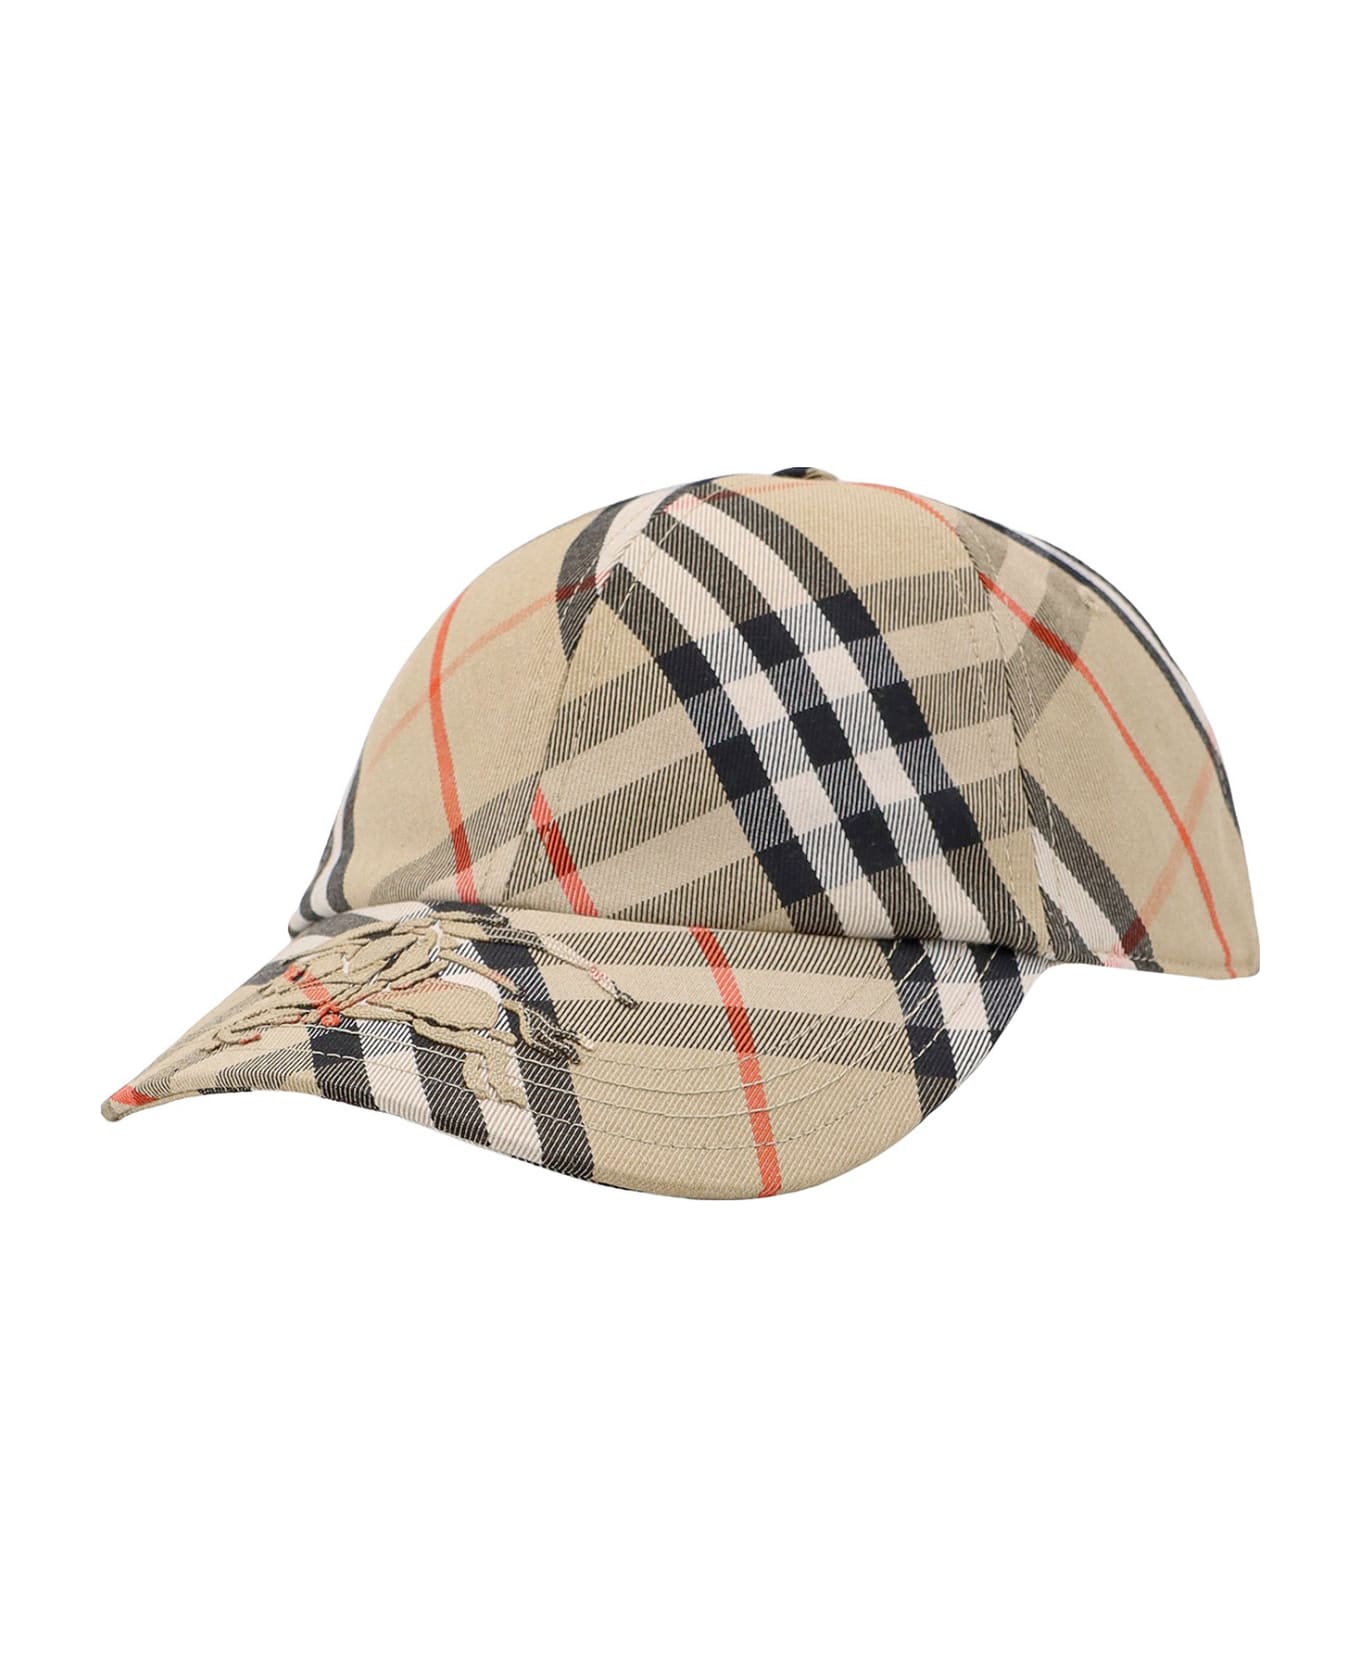 Burberry Hat - Beige 帽子